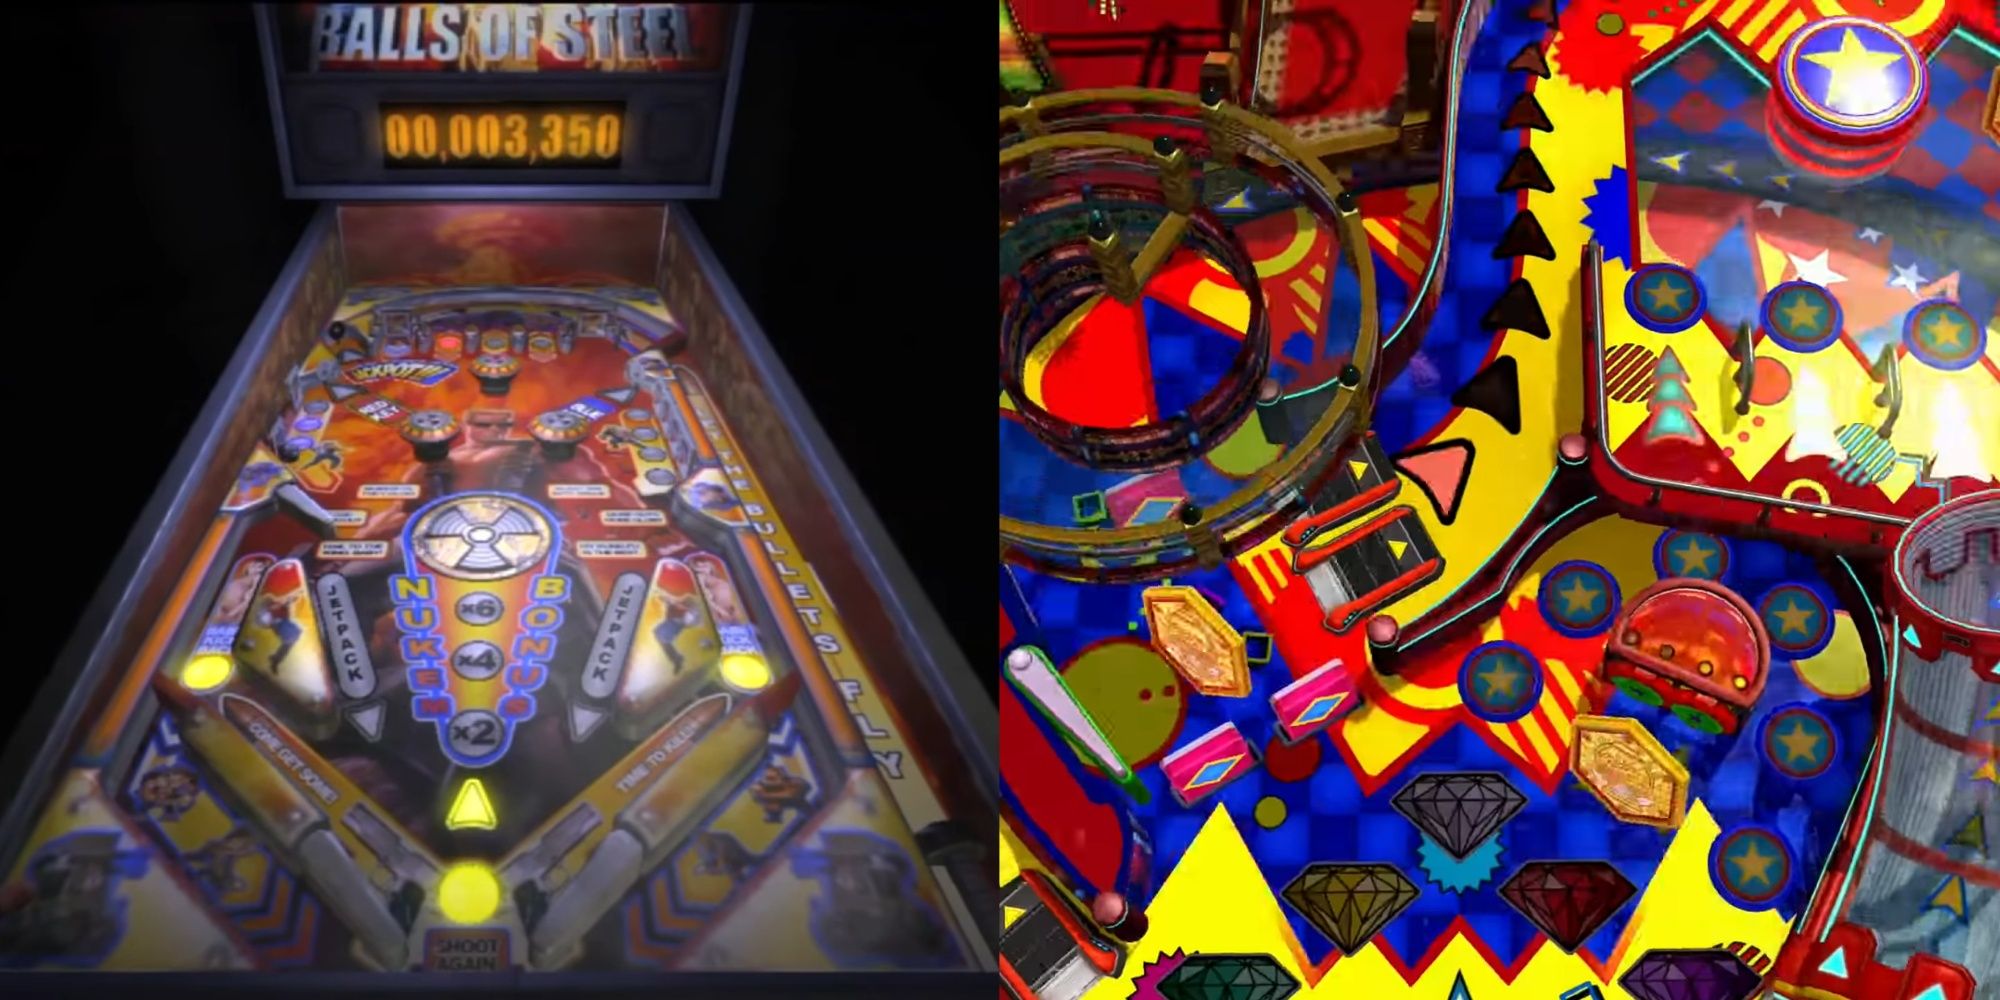 Duke Nukem Balls of Steel Pinball from Duke Nukem Forever and the Casino Night Pinball minigame from Sonic Generations.